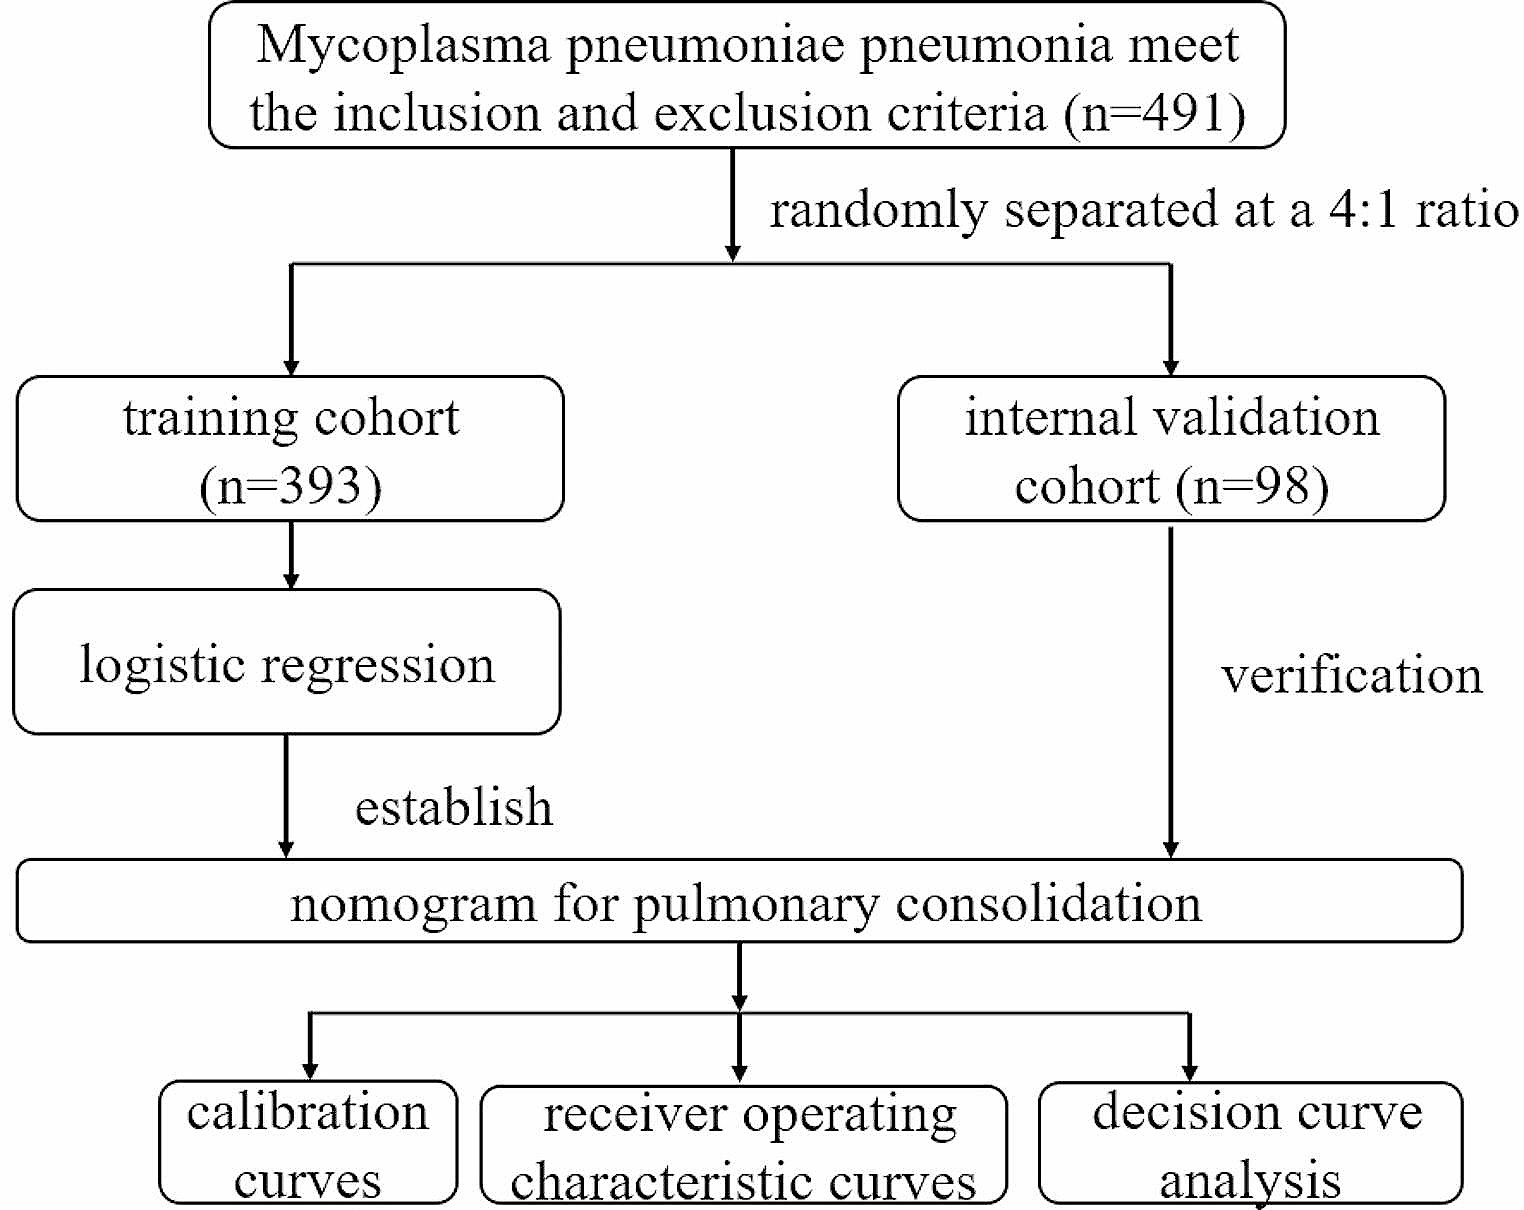 Development and validation of an online dynamic nomogram system for pulmonary consolidation in children with Mycoplasma pneumoniae pneumonia